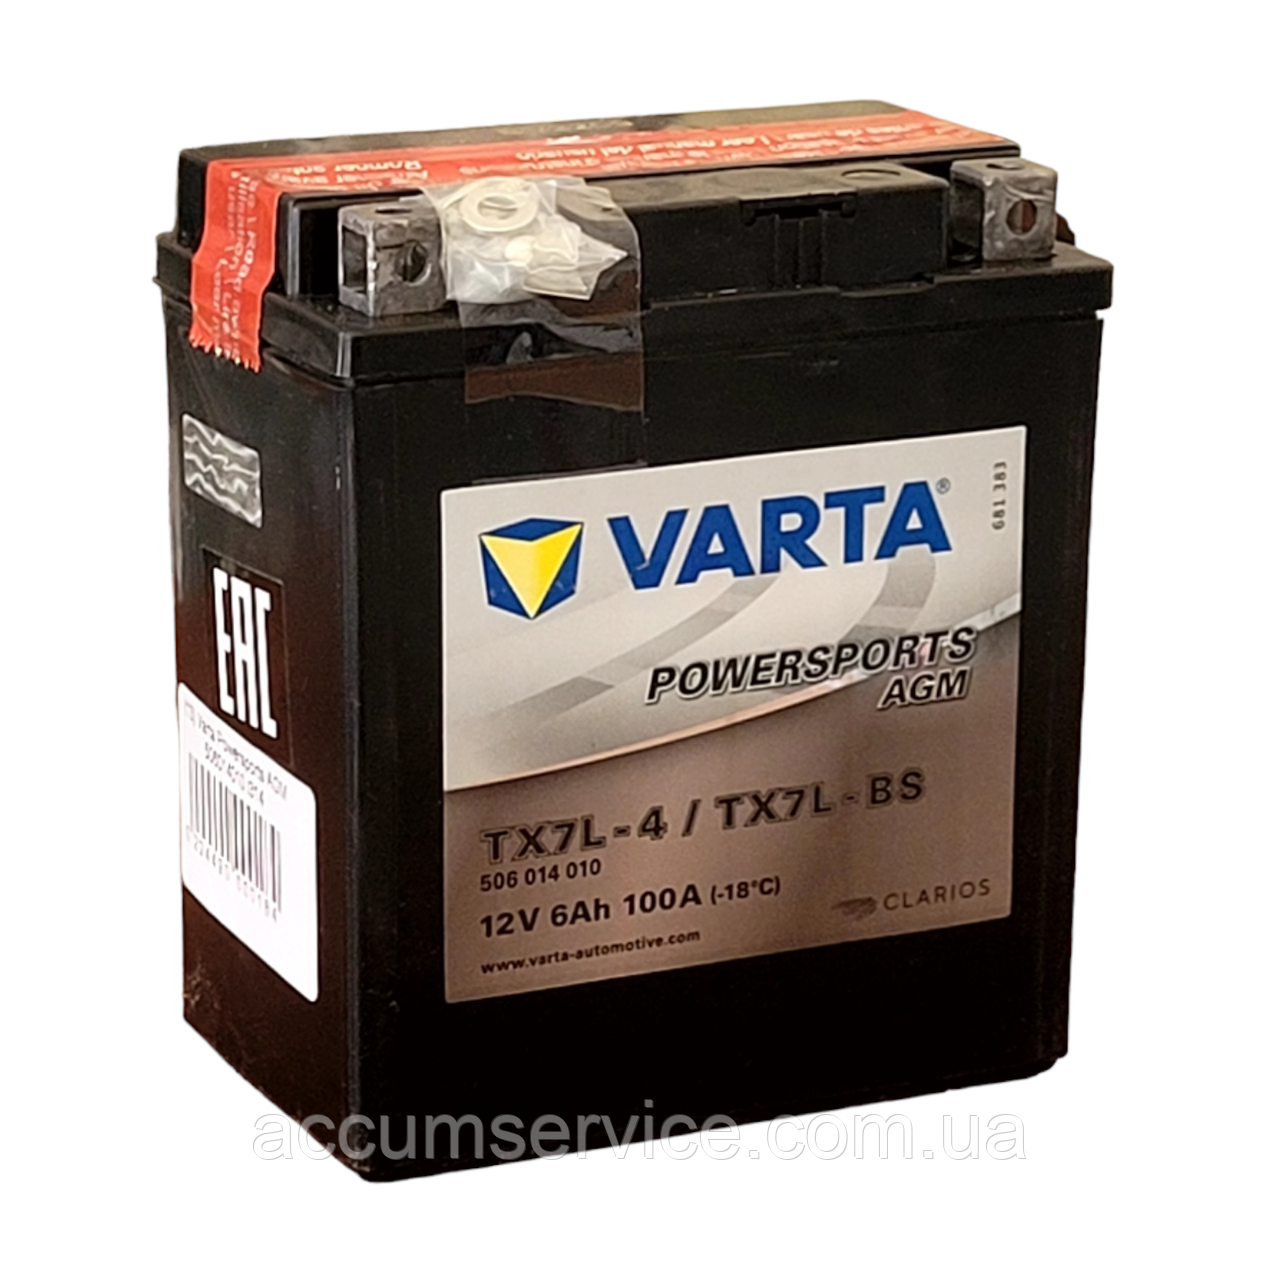 Акумулятор Varta Powersports AGM 506014010 I314